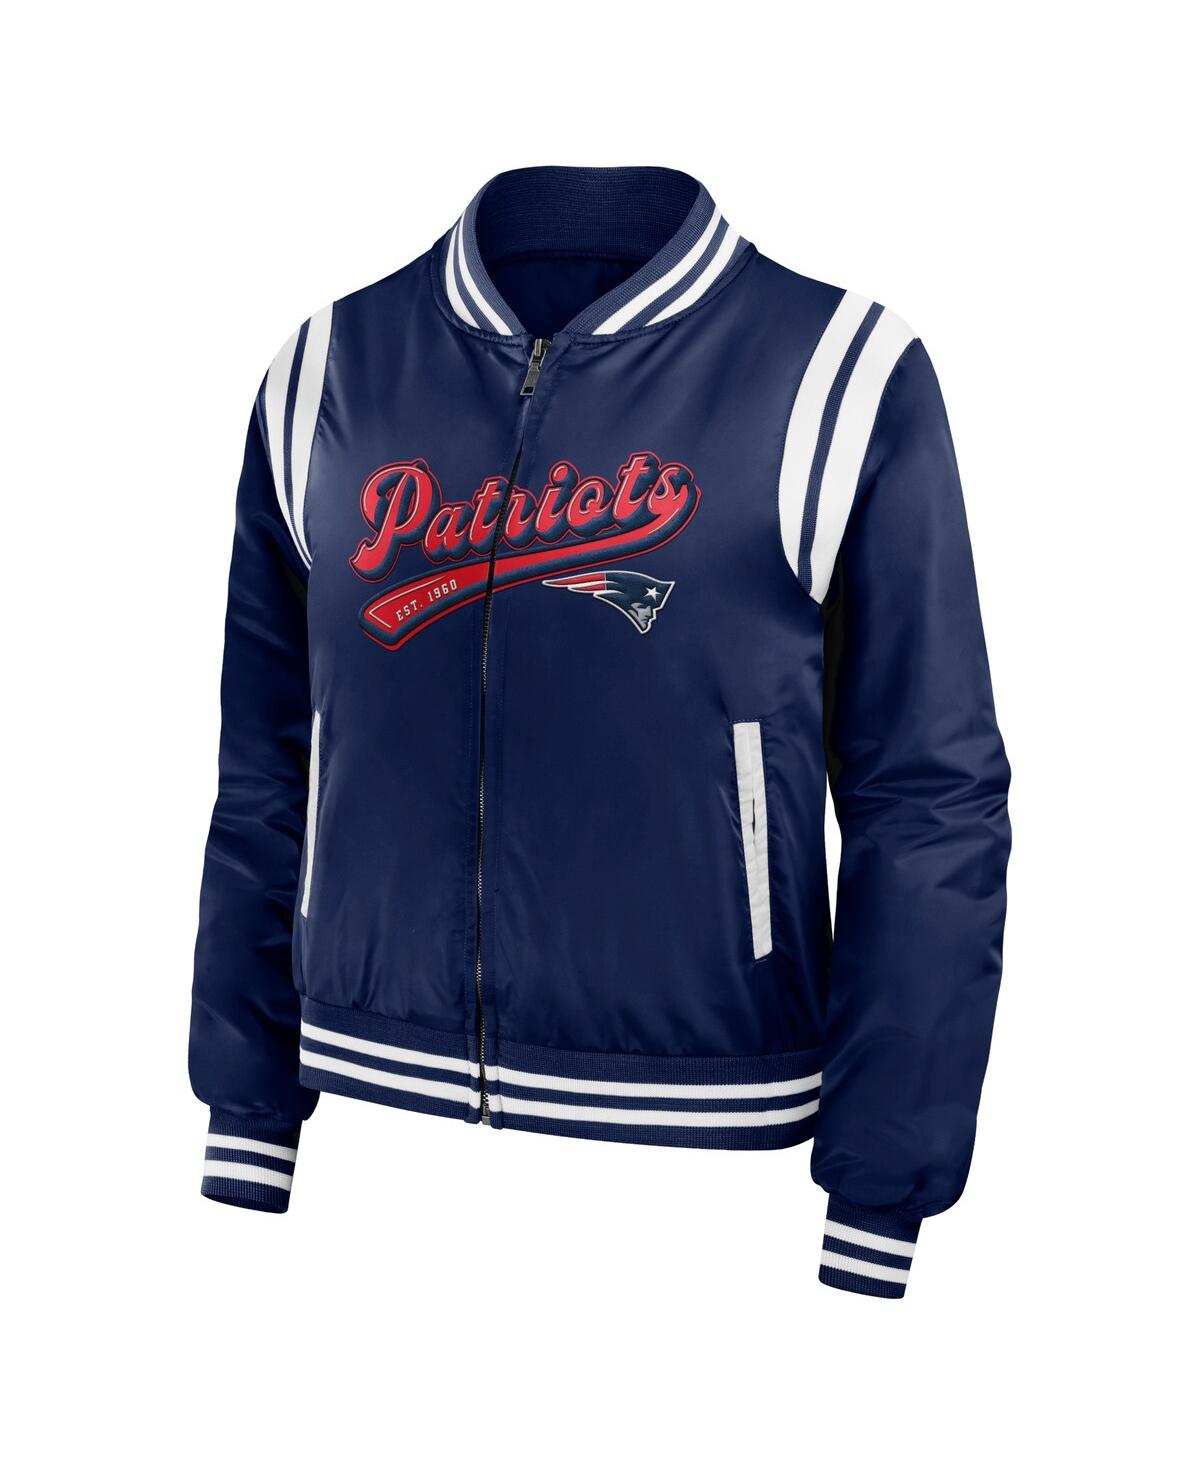 Shop Wear By Erin Andrews Women's  Navy New England Patriots Bomber Full-zip Jacket